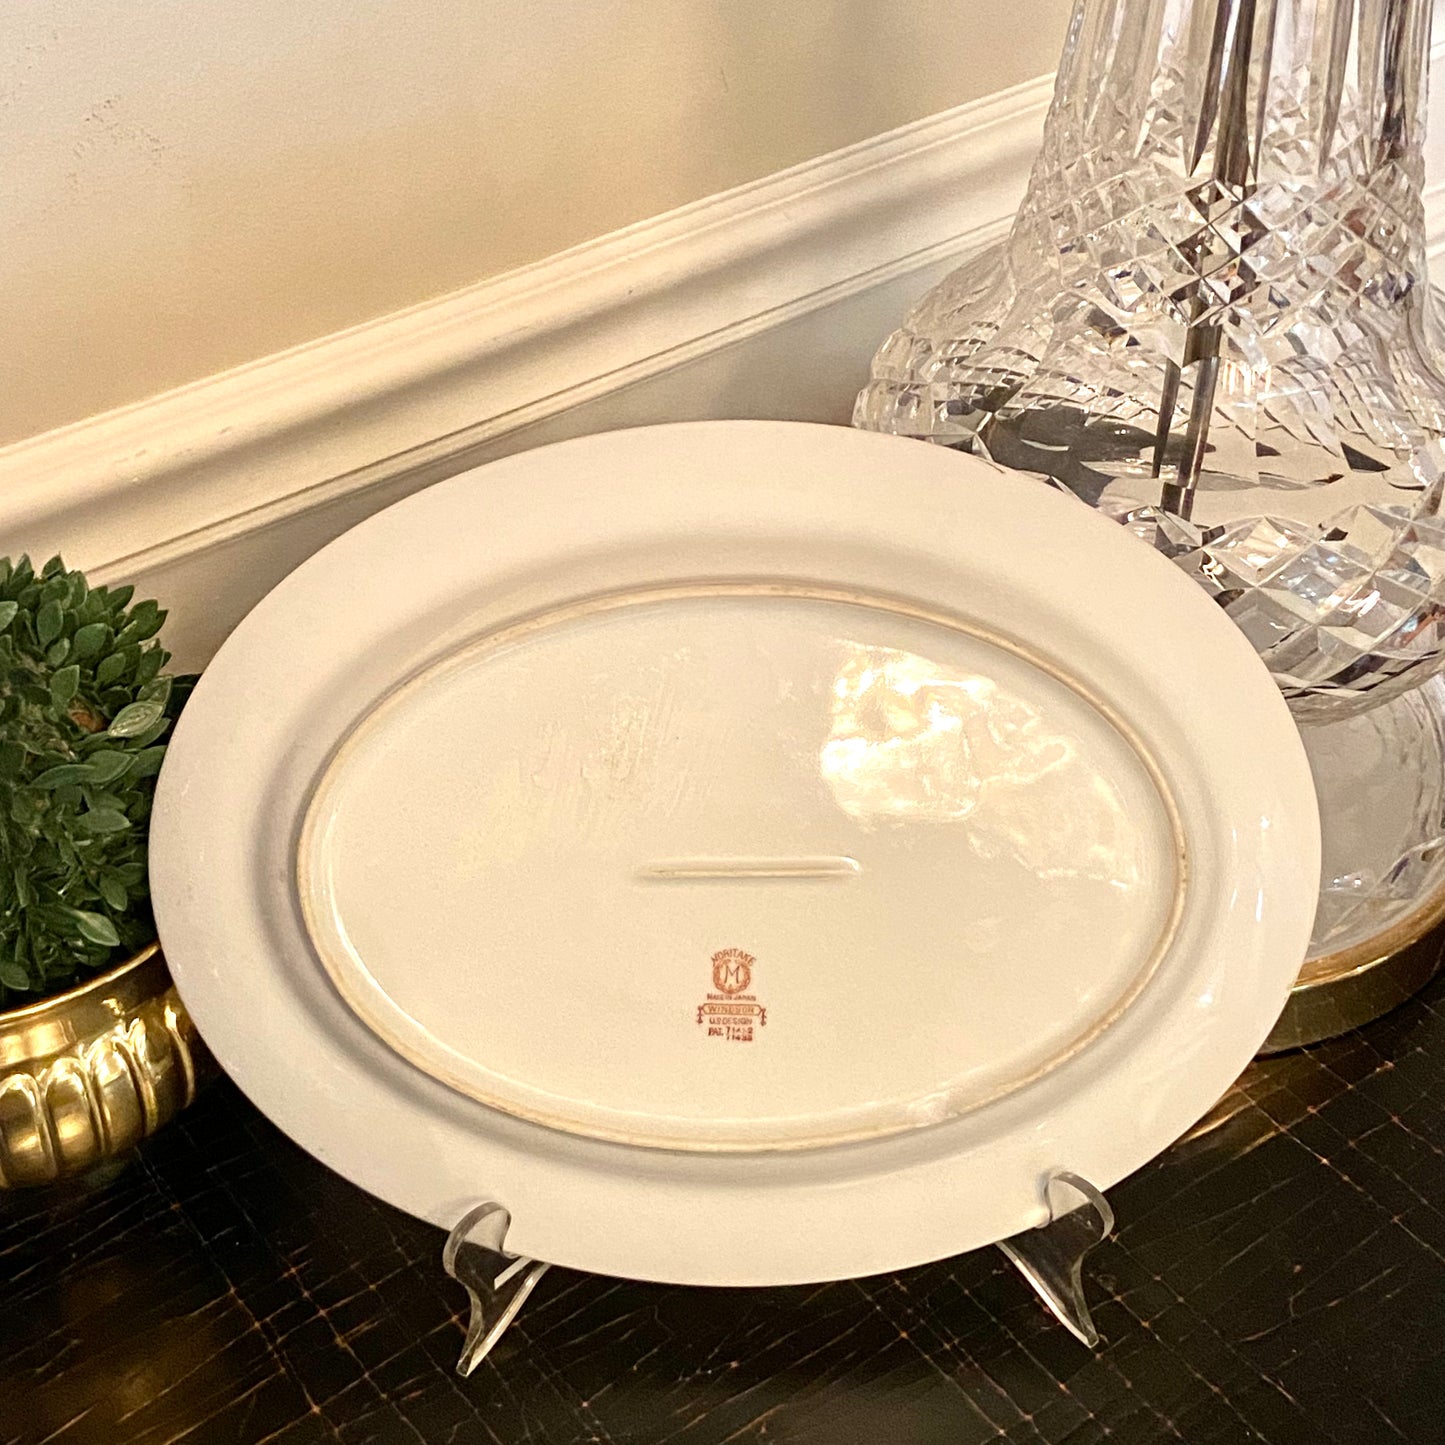 Absolutely stunning vintage oval porcelain platter by Noritake in Windsor